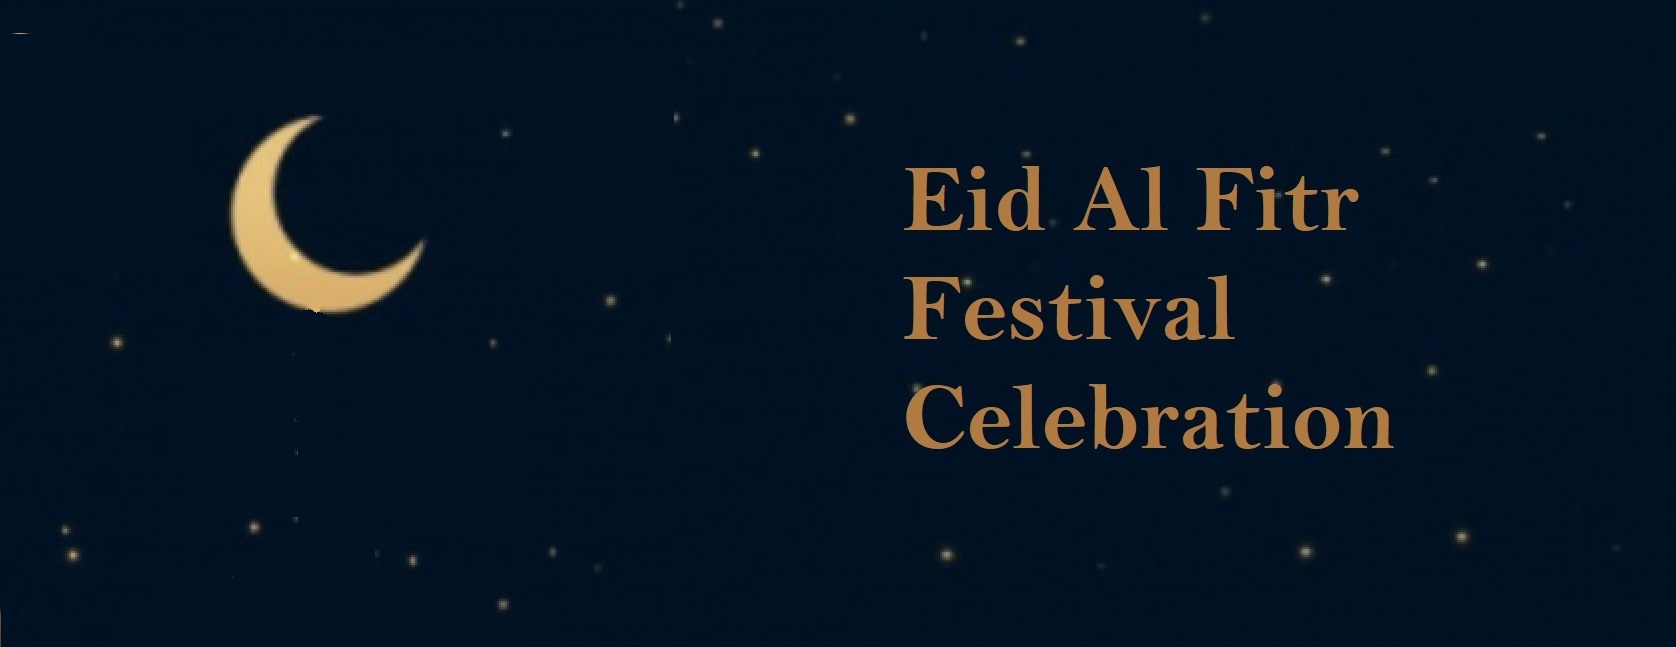 Eid-Ul-Fitr Festival Tour, Kerala